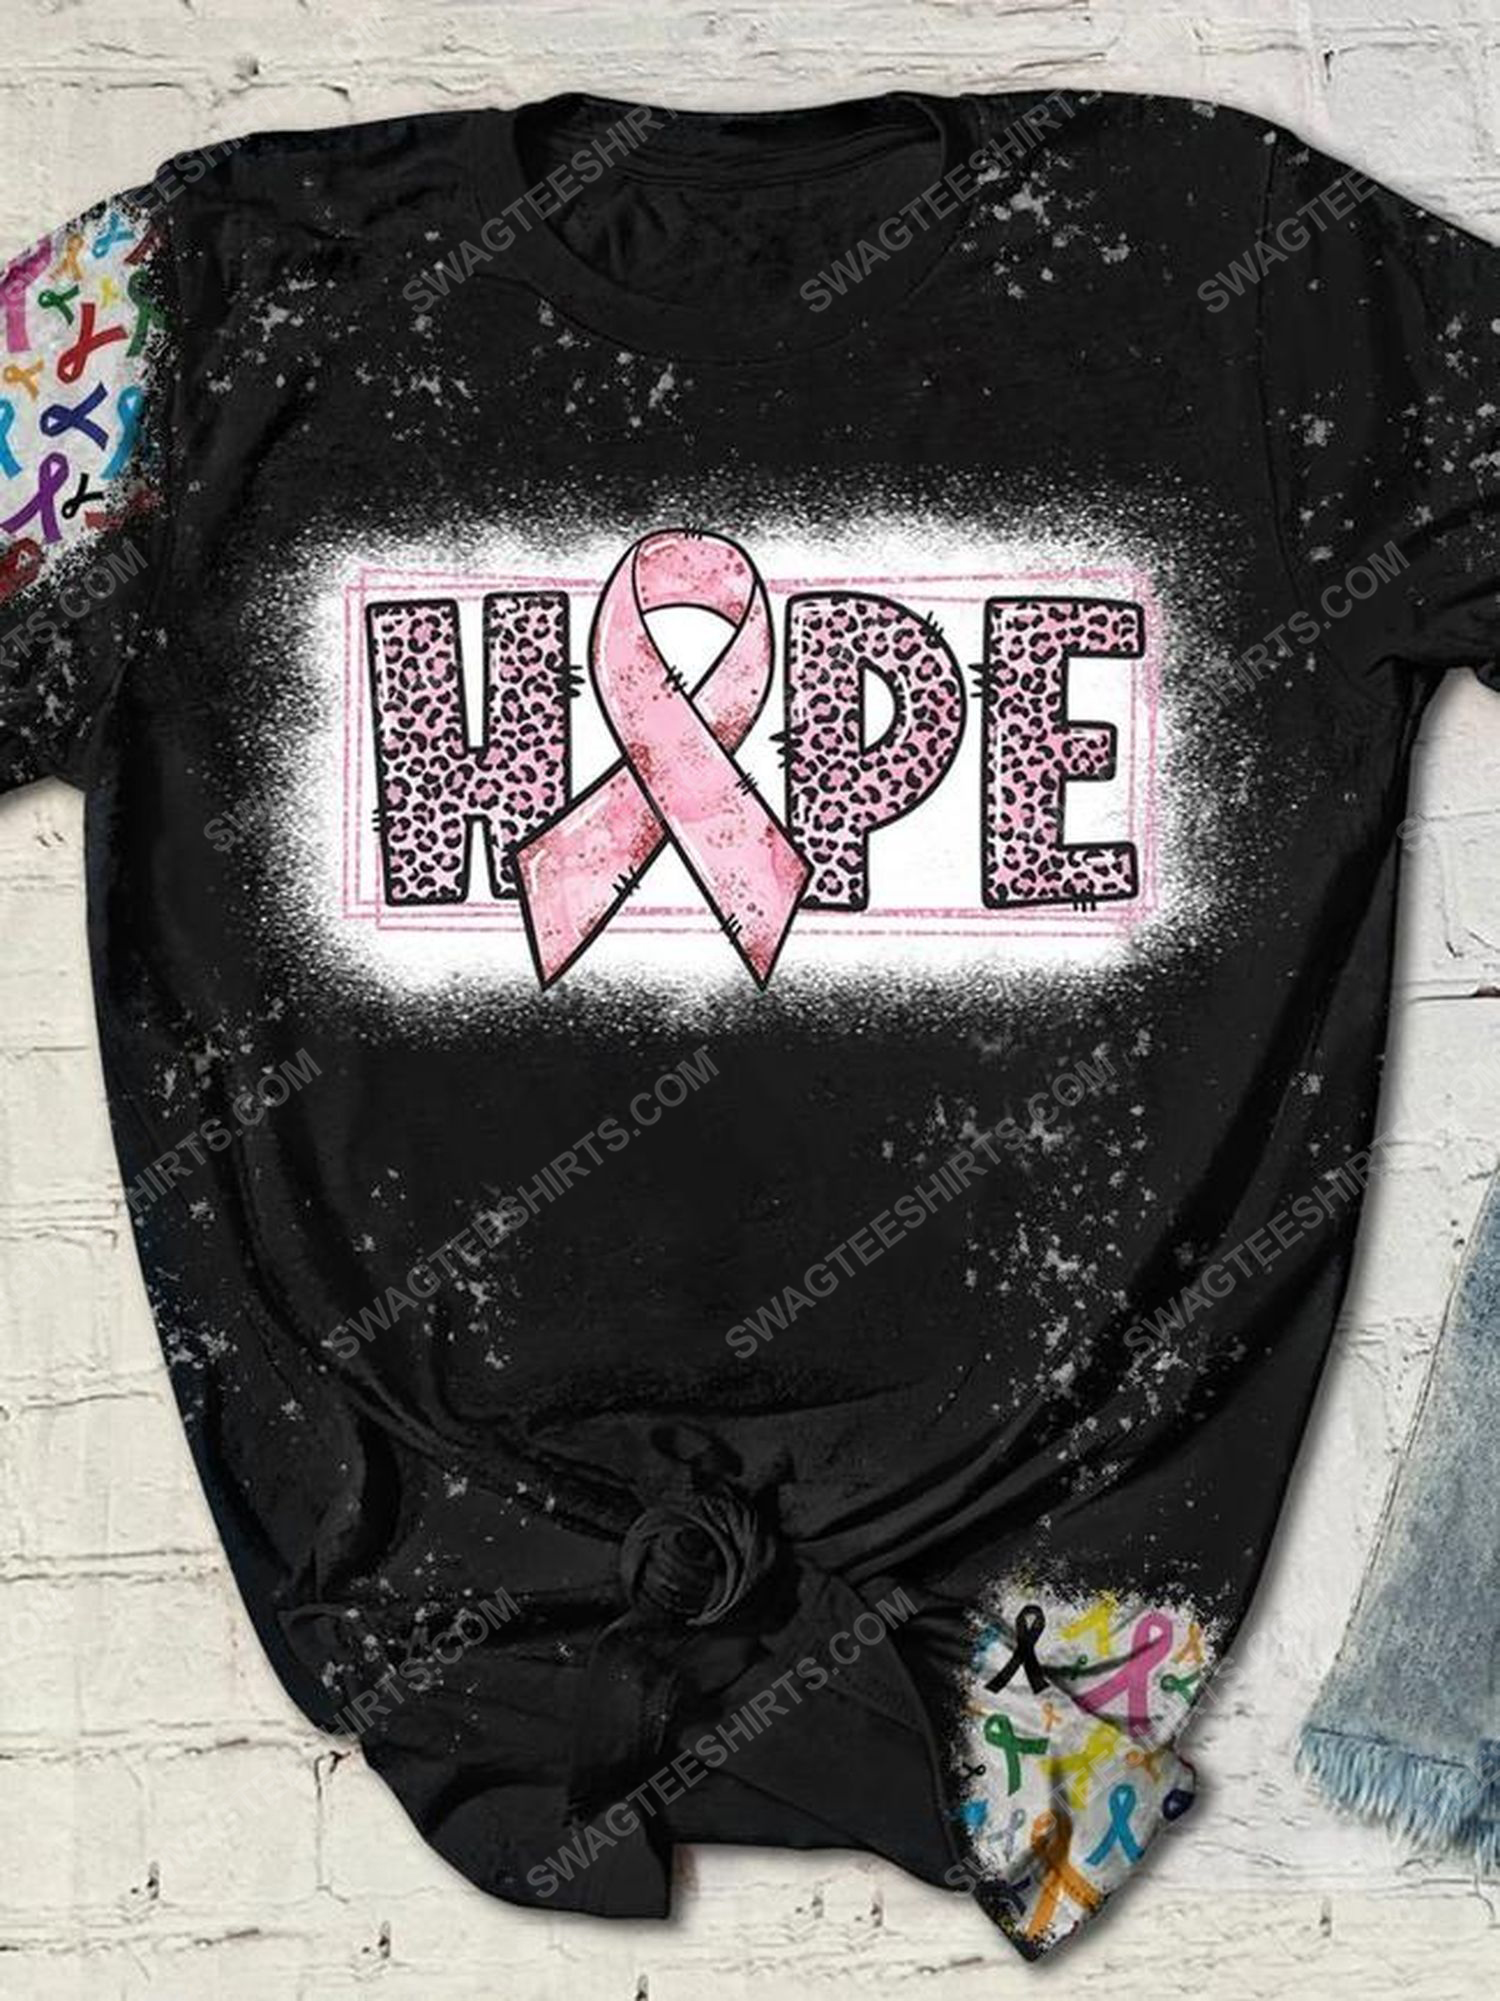 Breast cancer awareness hope full print shirt 1 - Copy